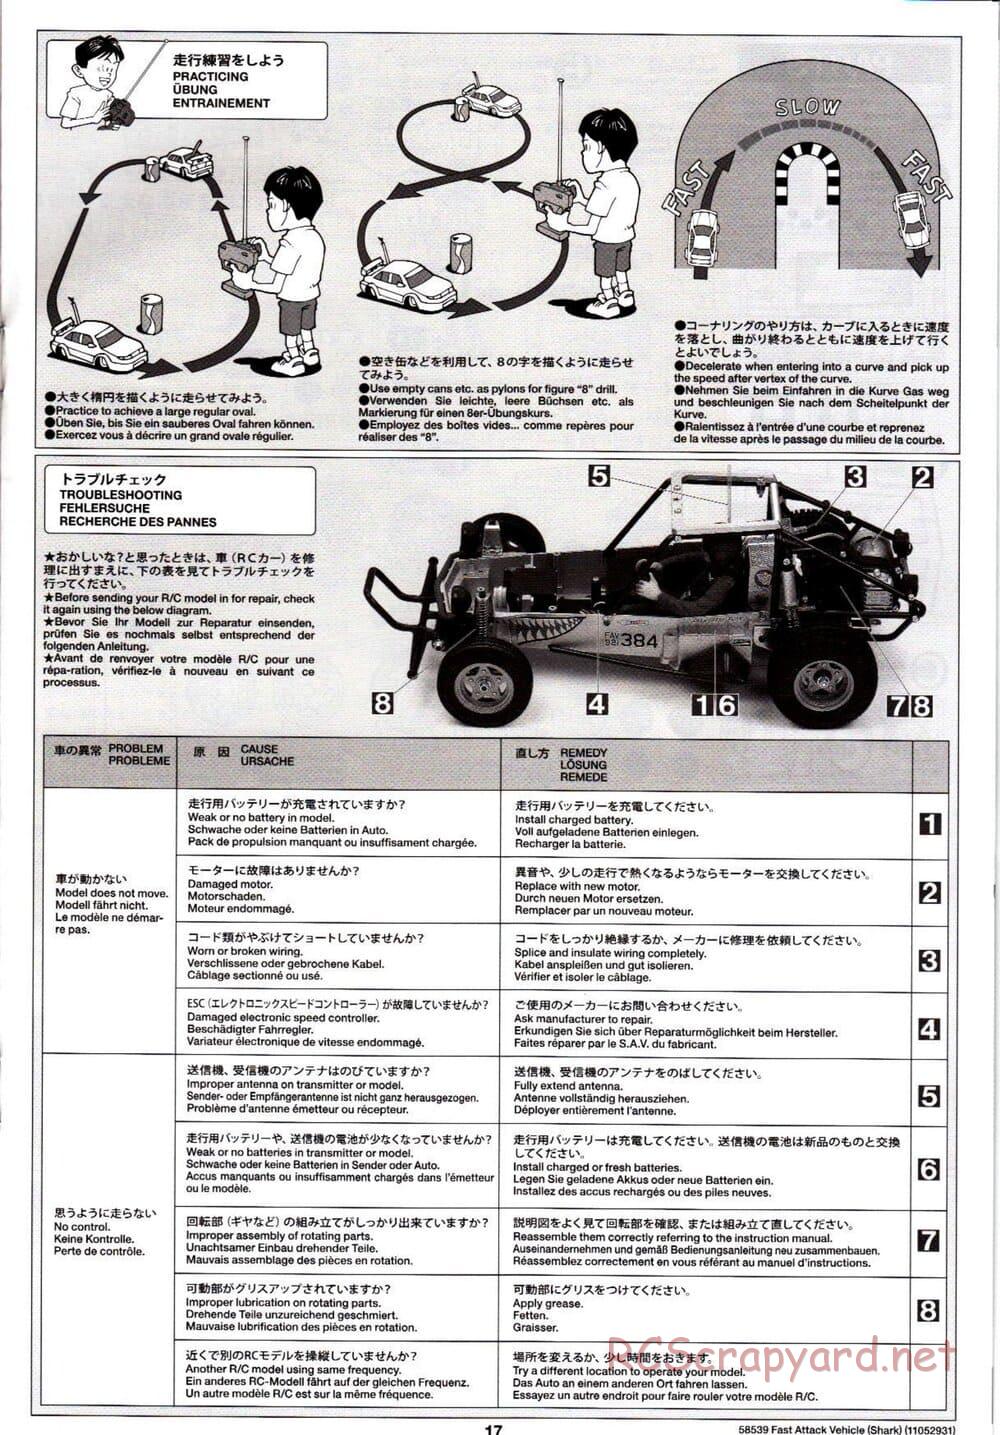 Tamiya - Fast Attack Vehicle w/ Shark Mouth - FAV Chassis - Manual - Page 17